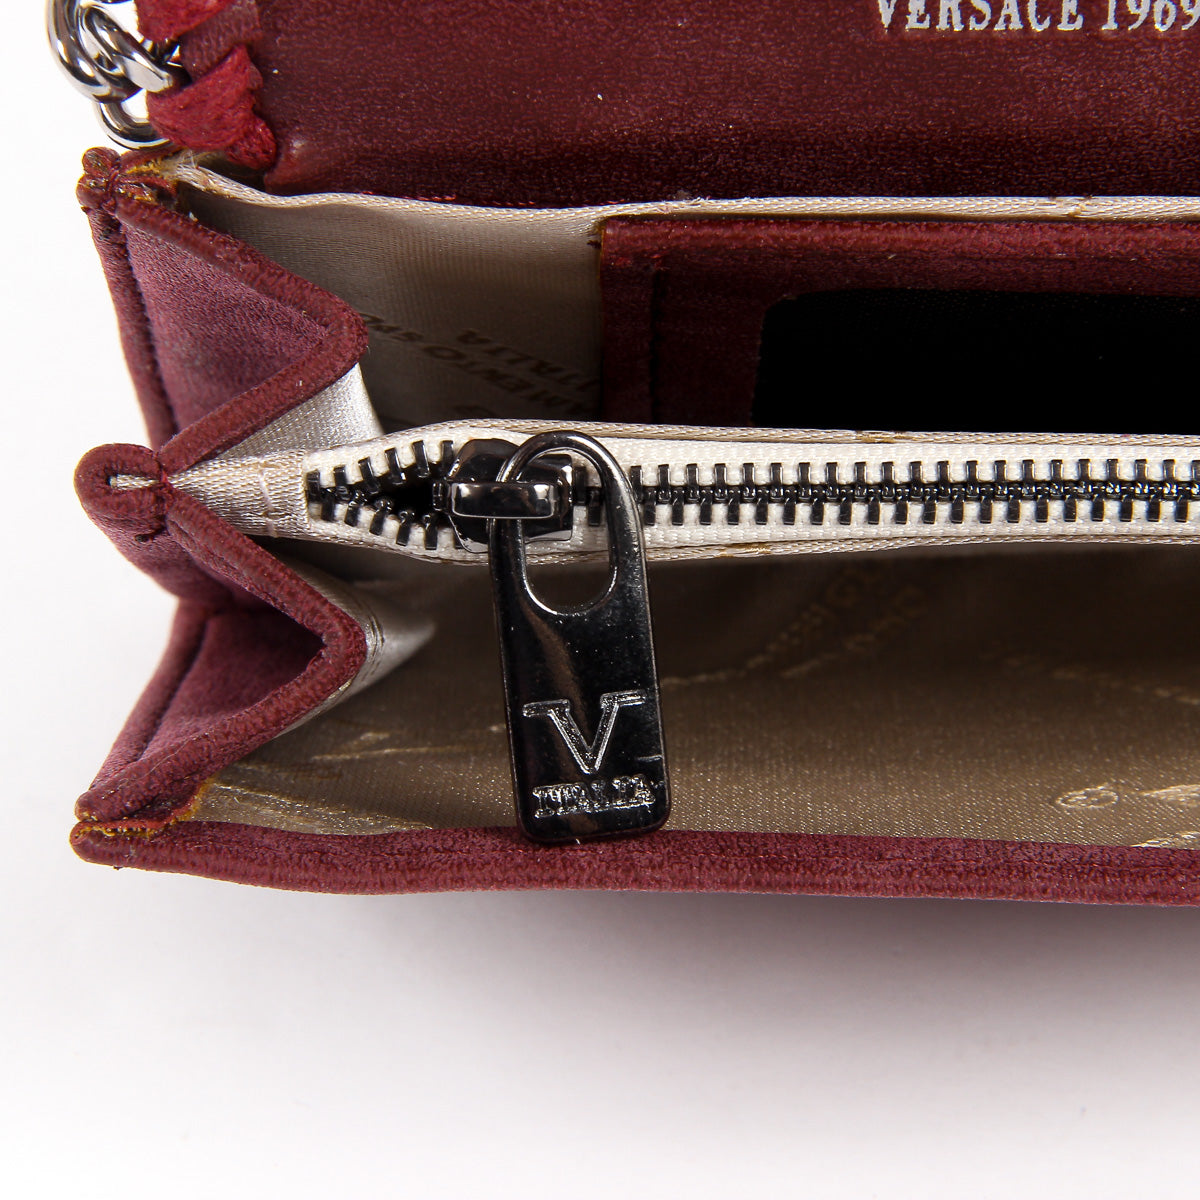 VERSACE LA MEDUSA Round Red Leather Camera Cross Body Bag Medium Size | eBay